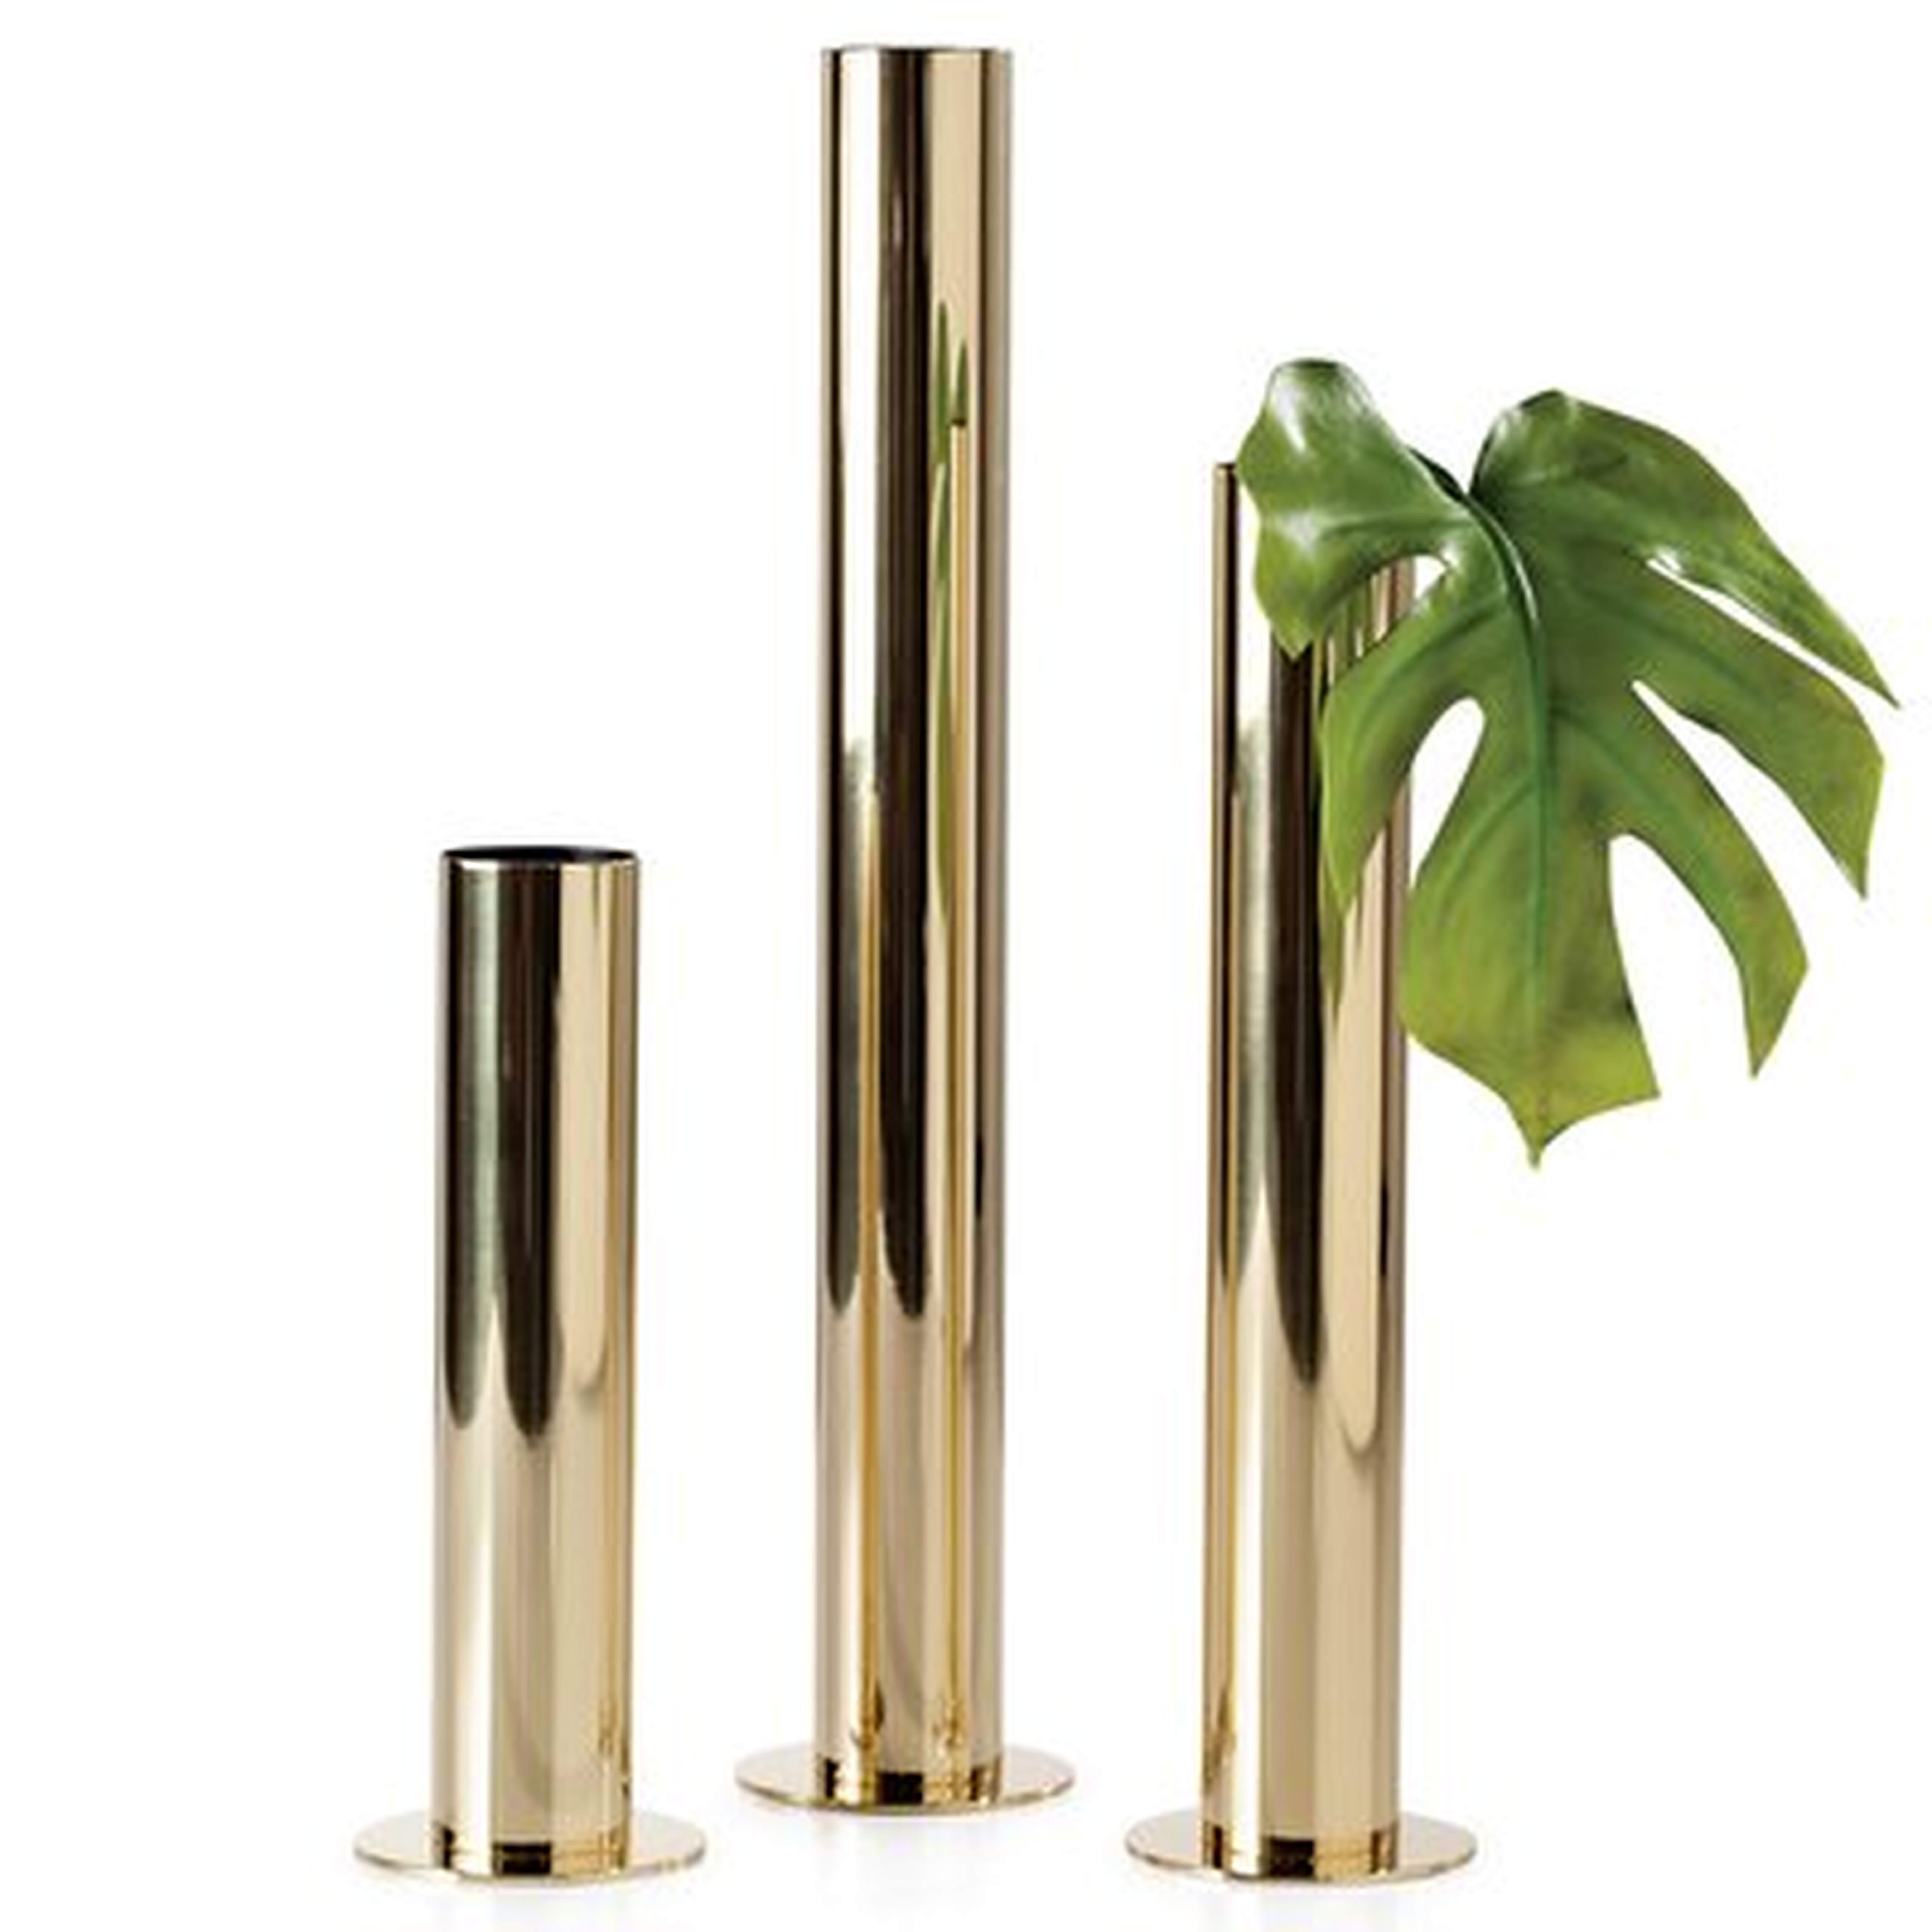 3 Piece Washington Mews Gold Stainless Steel Table Vase Set - Wayfair